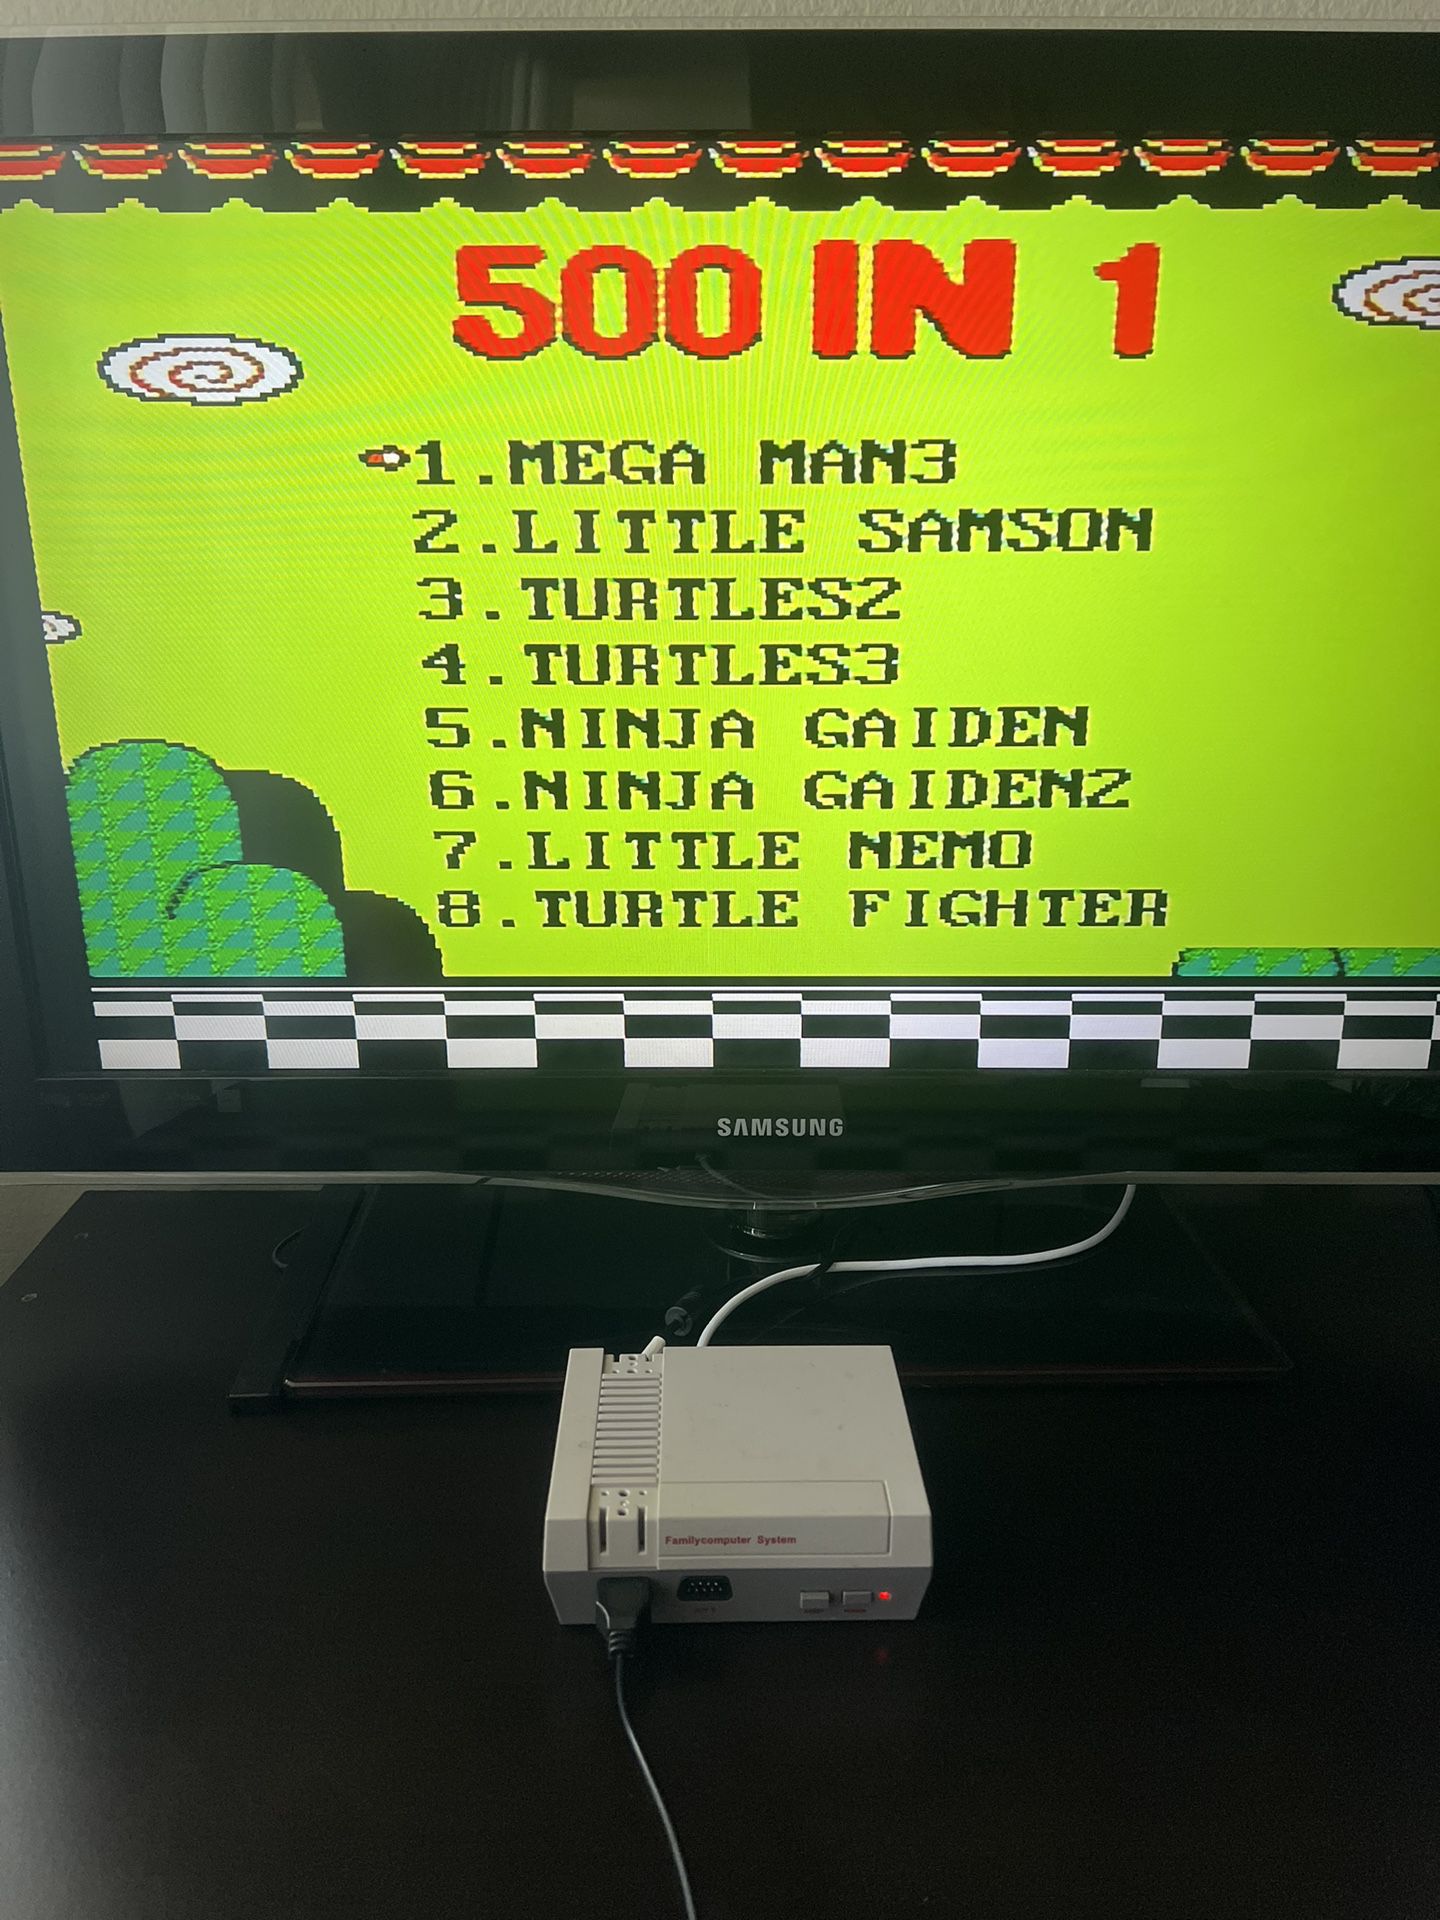 Mini Game Entertainment System Built-in 500 Mini Classic Games